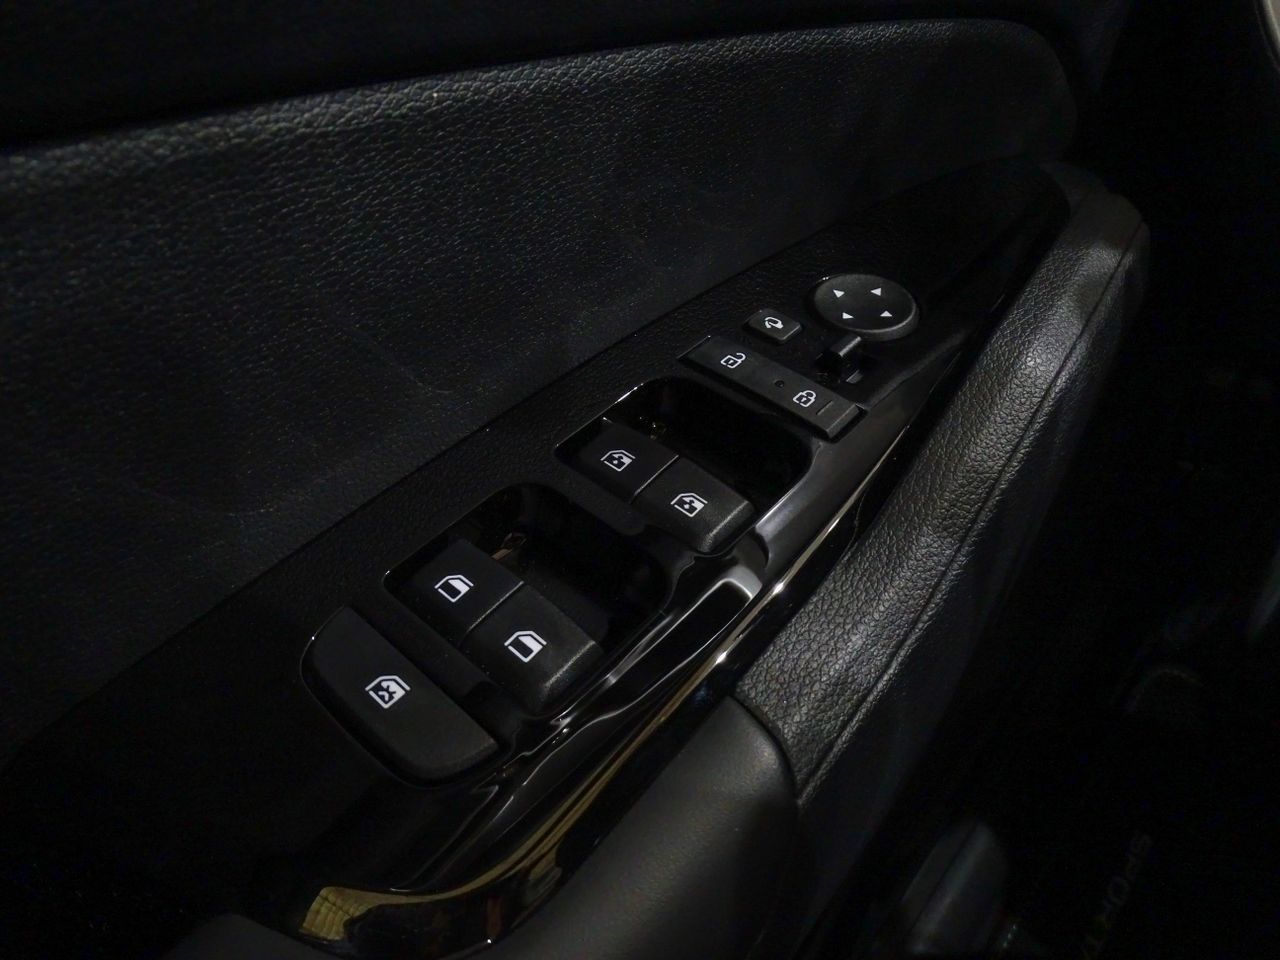 Kia Sportage 1.6 T-GDi 110kW (150CV)   4x2 Drive  - Foto 2